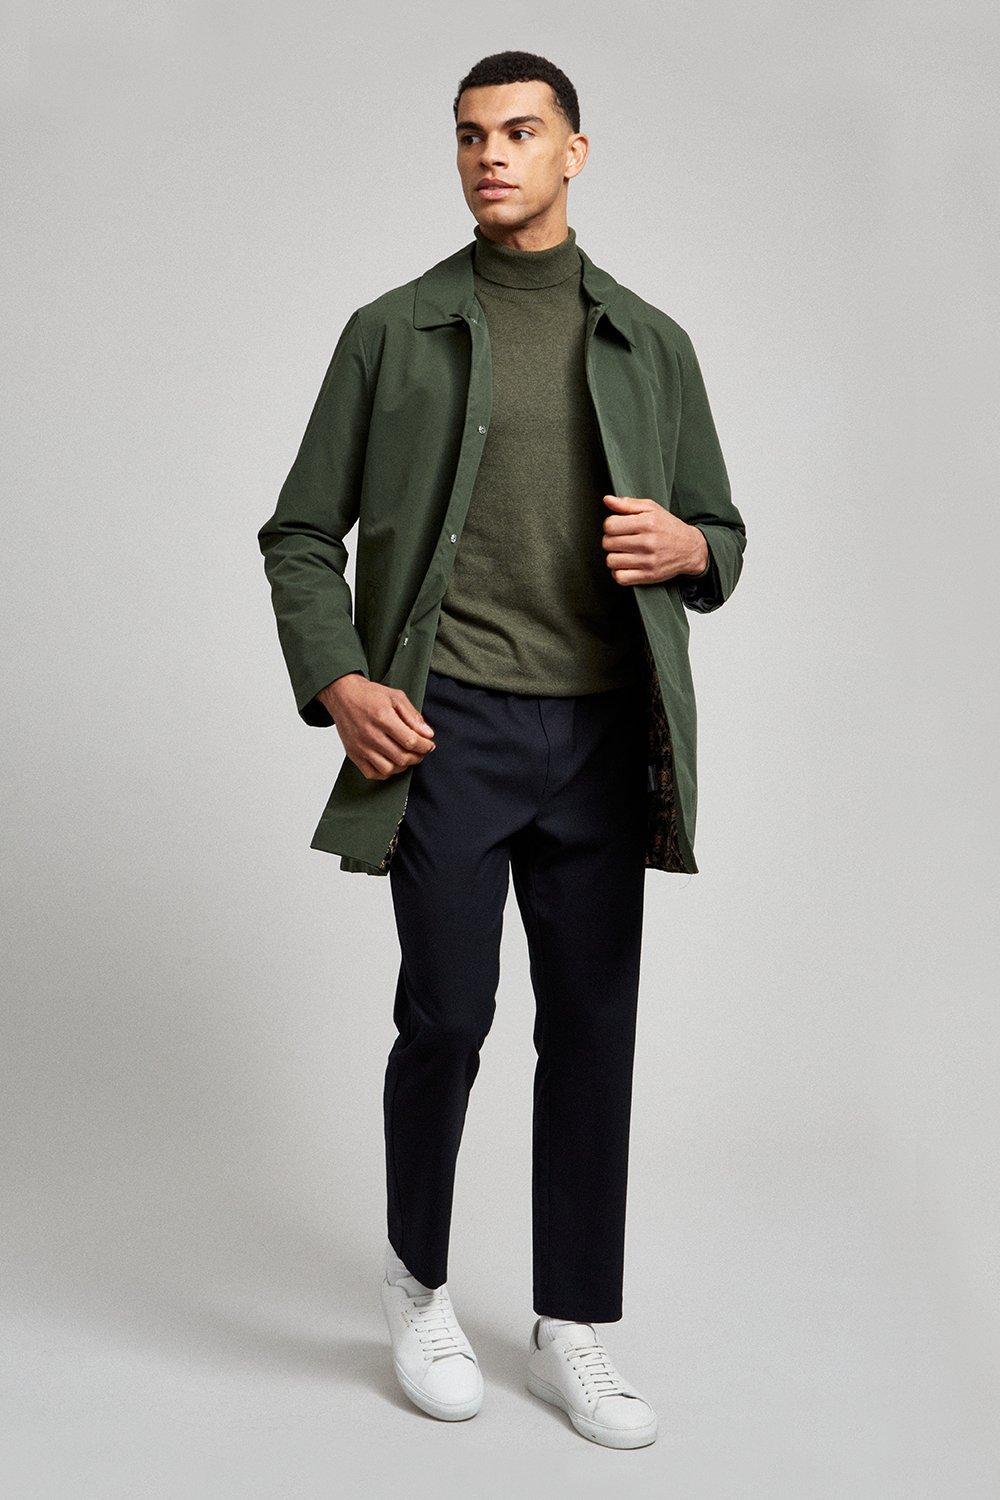 Jackets & Coats | Khaki Mac | Burton